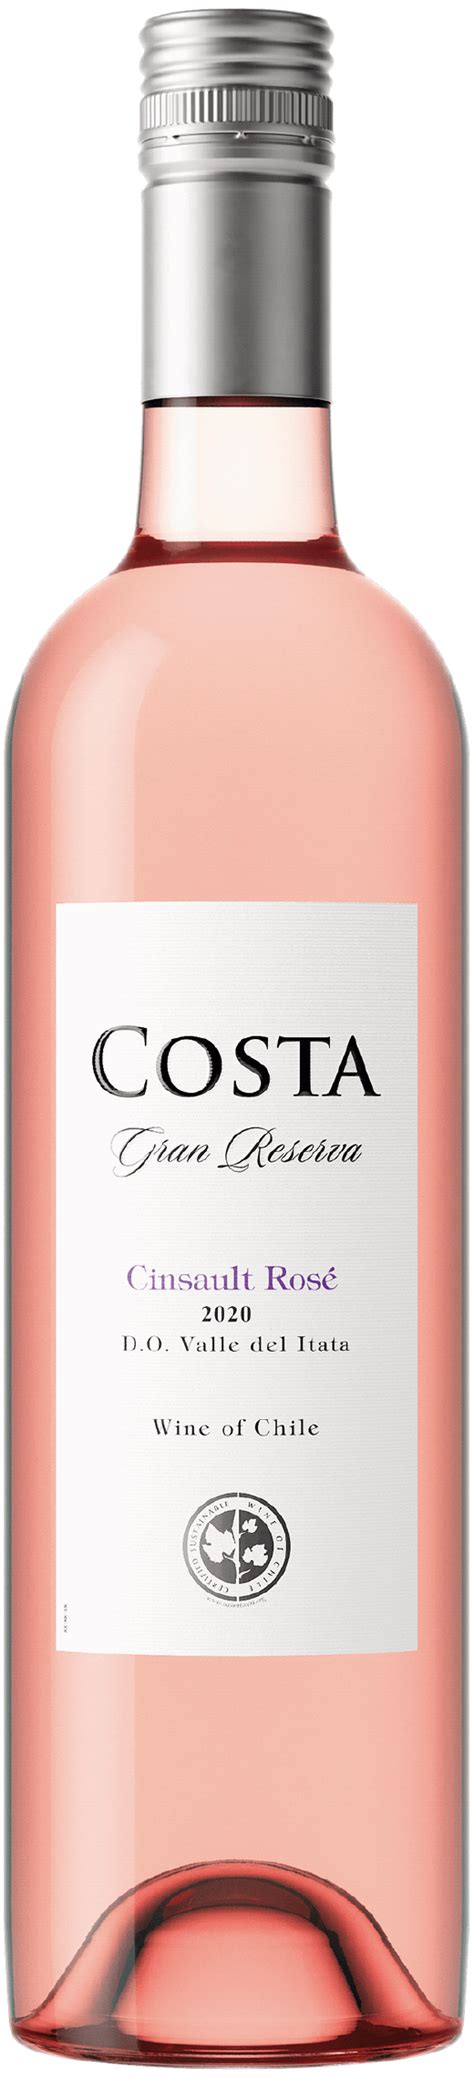 costa gran reserva cinsault rosé 2020 wine table